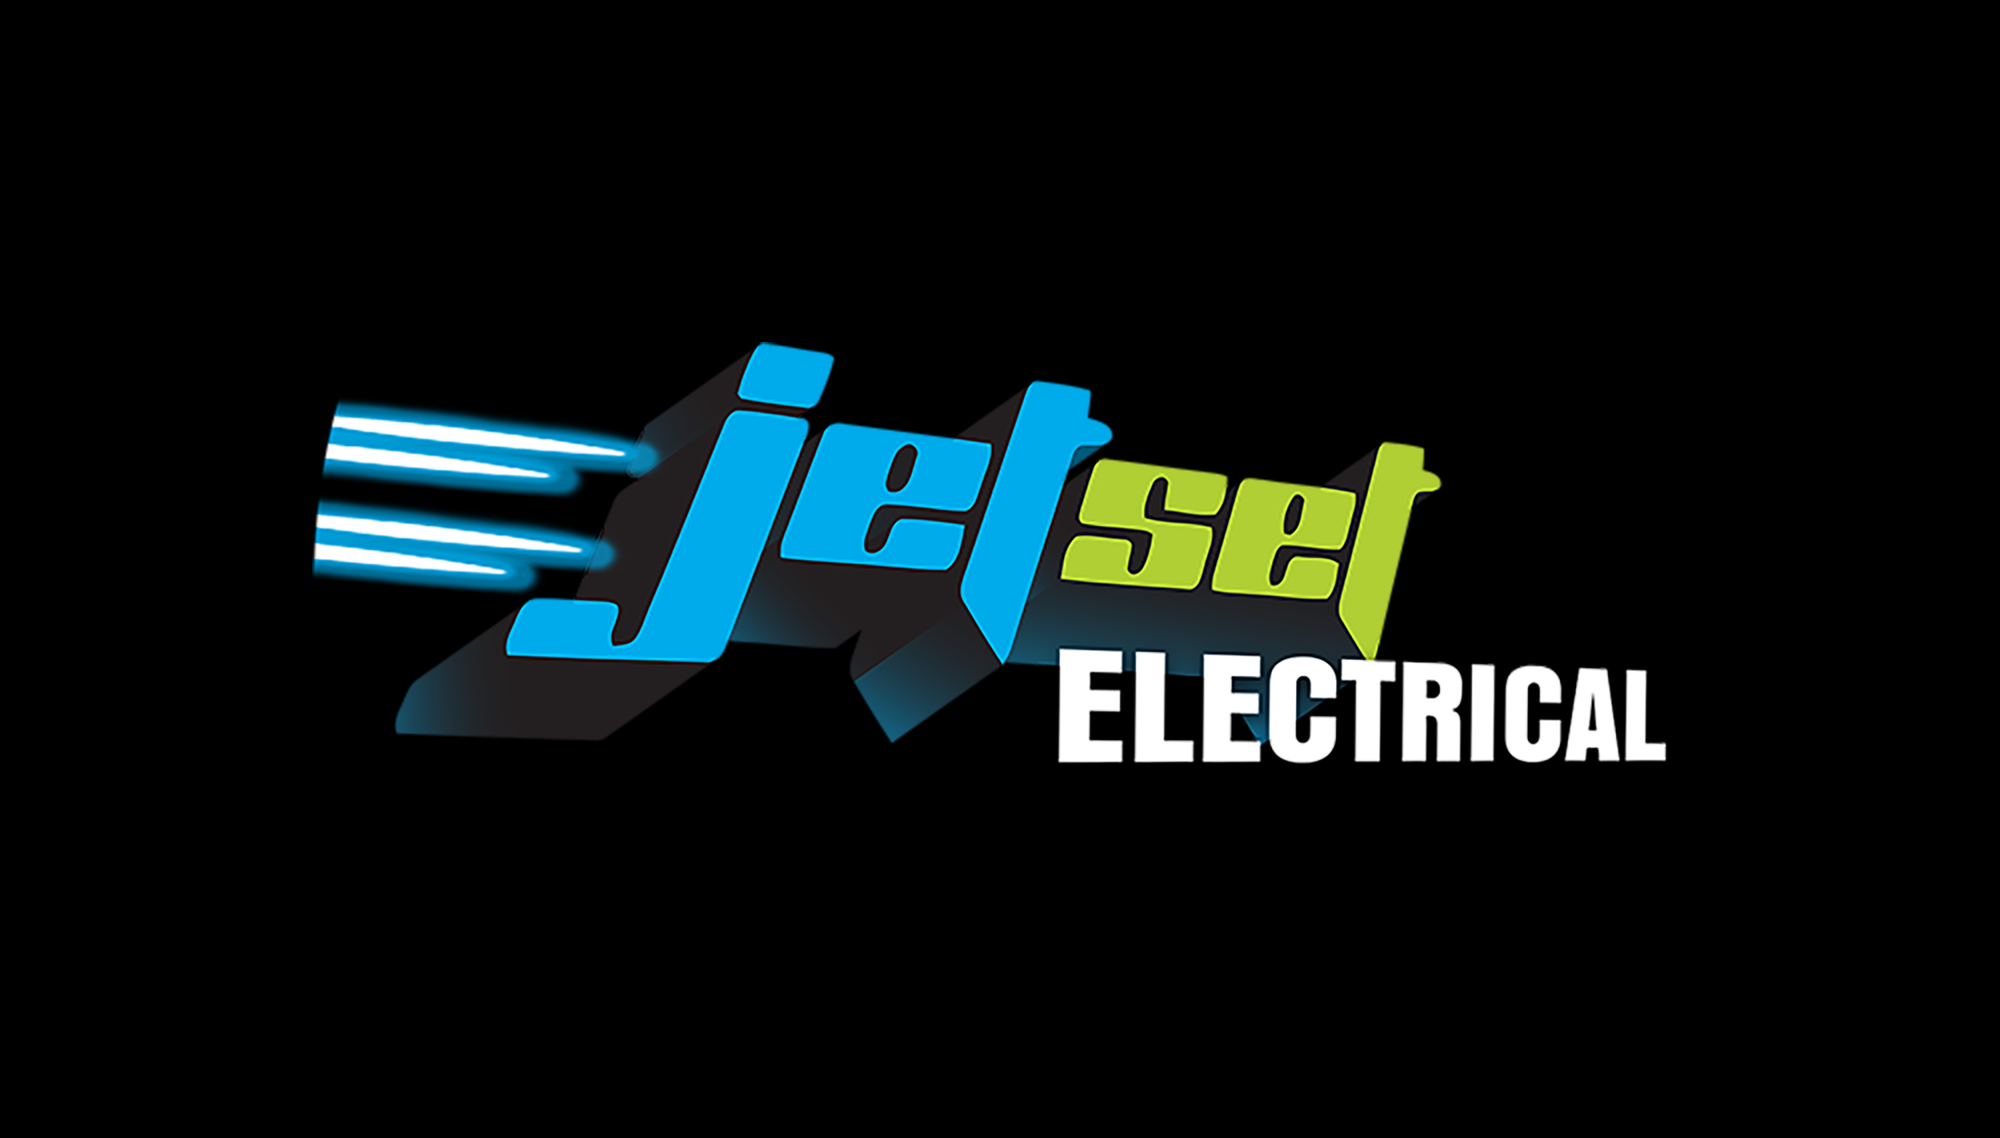 Jetset Electrical